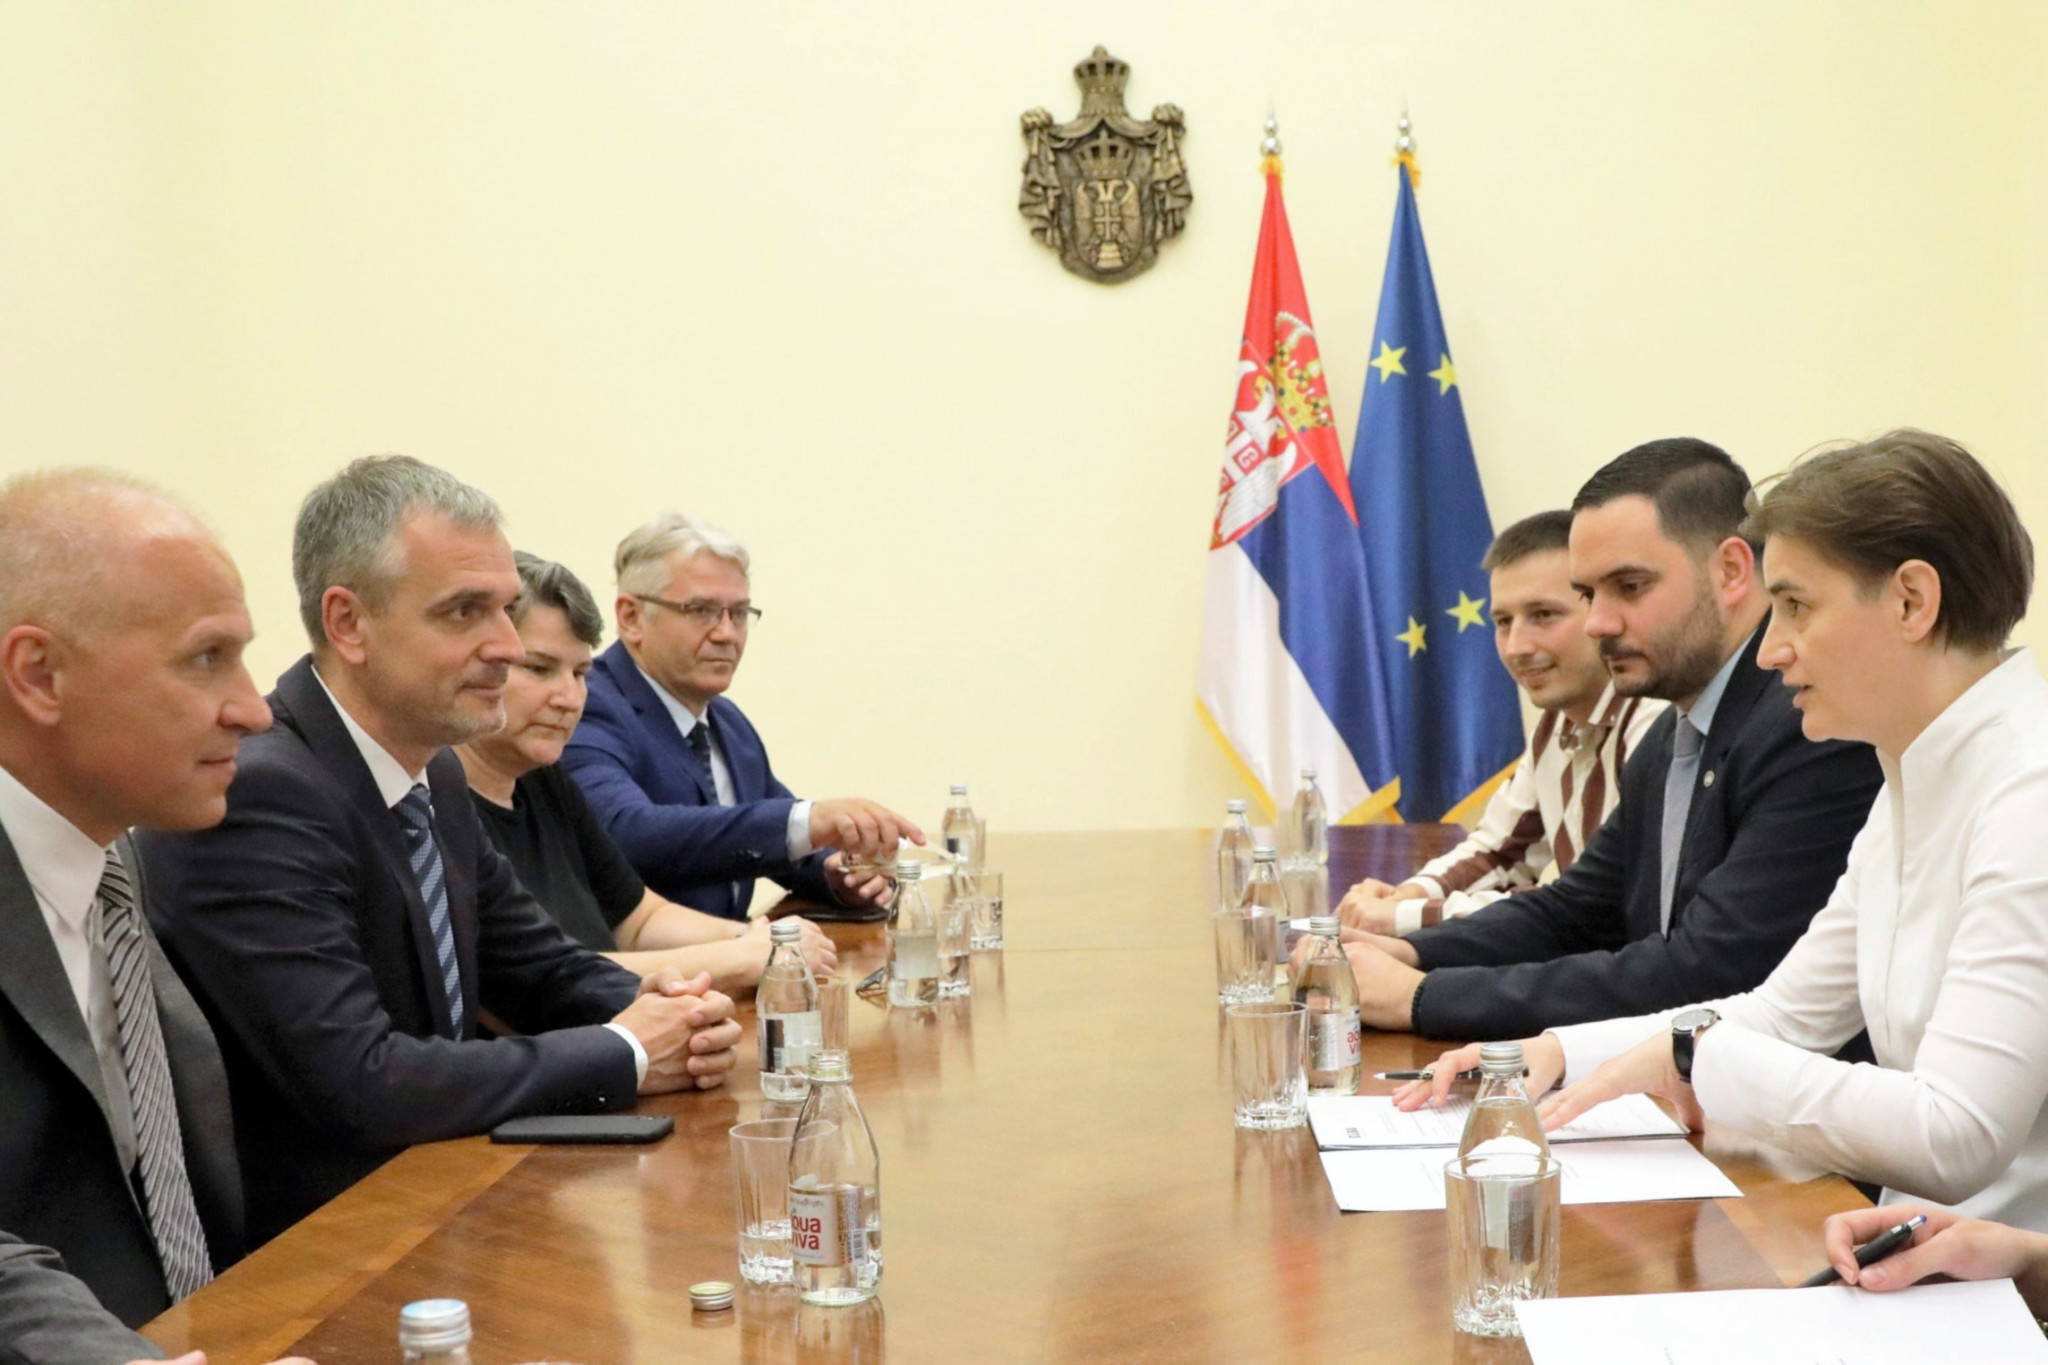 EUSA meet with Serbian Prime Minister ahead of 2020 European Universities Games in Belgrade